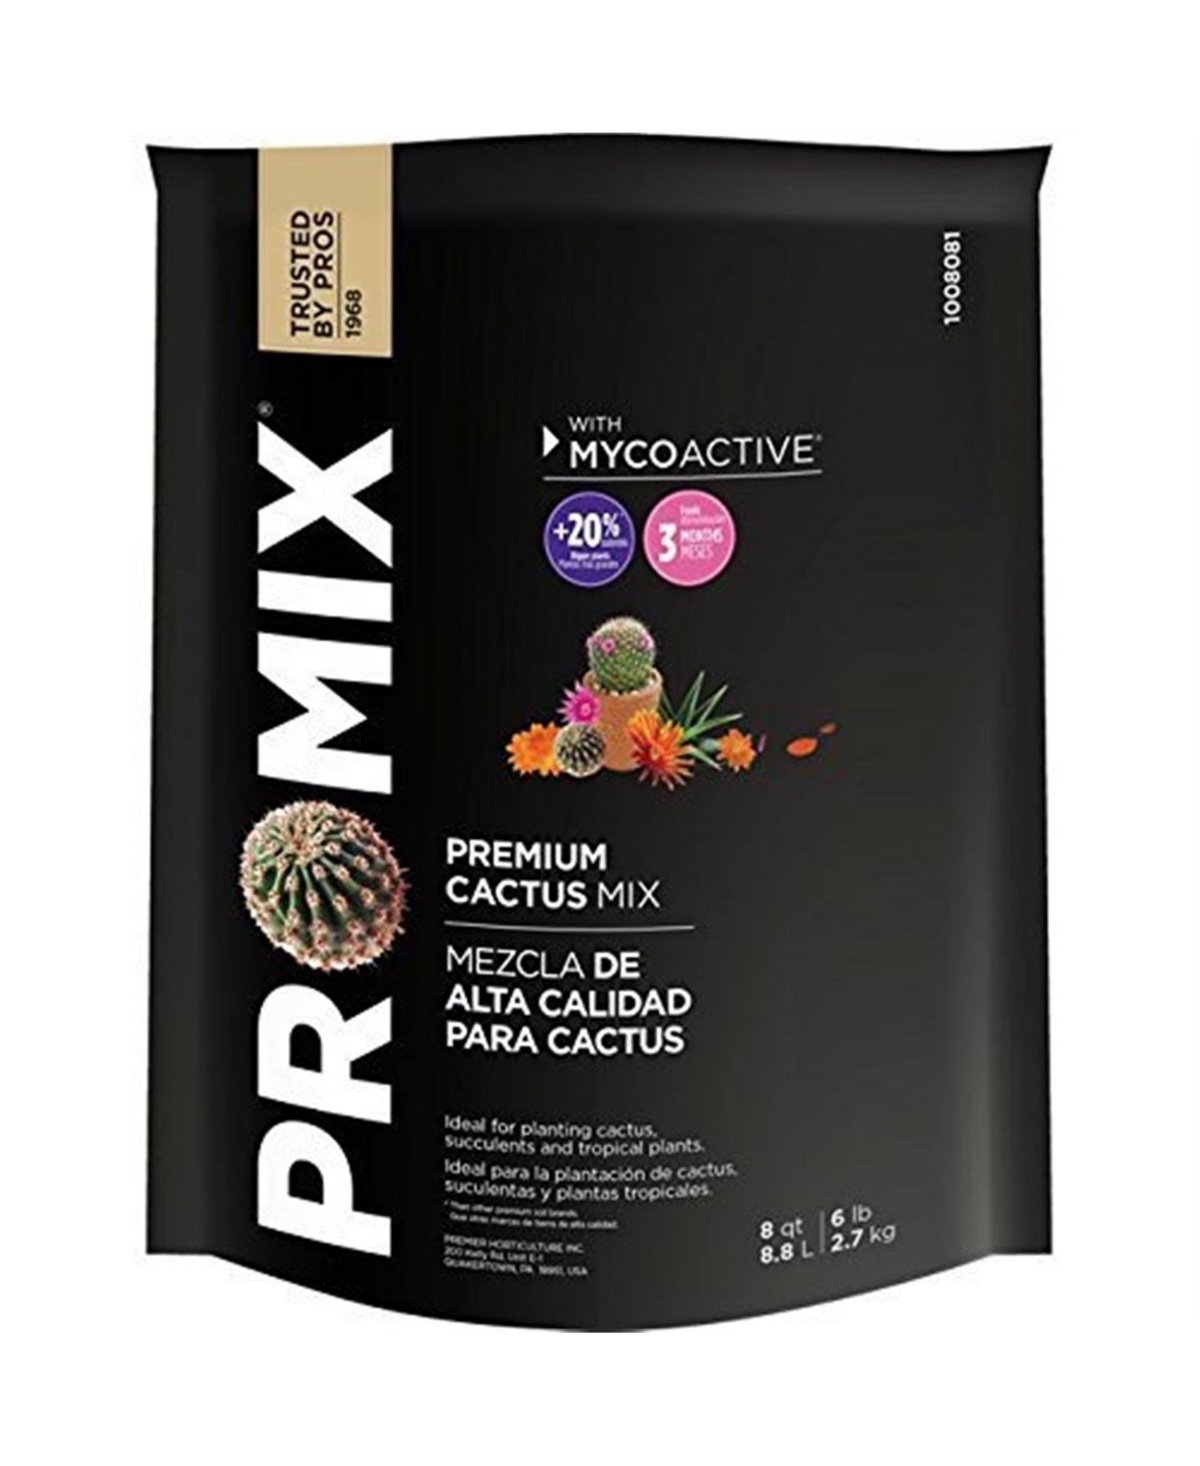 Pro-mix Cactus Mix with Mycoactive, 8 Quarts - Multi